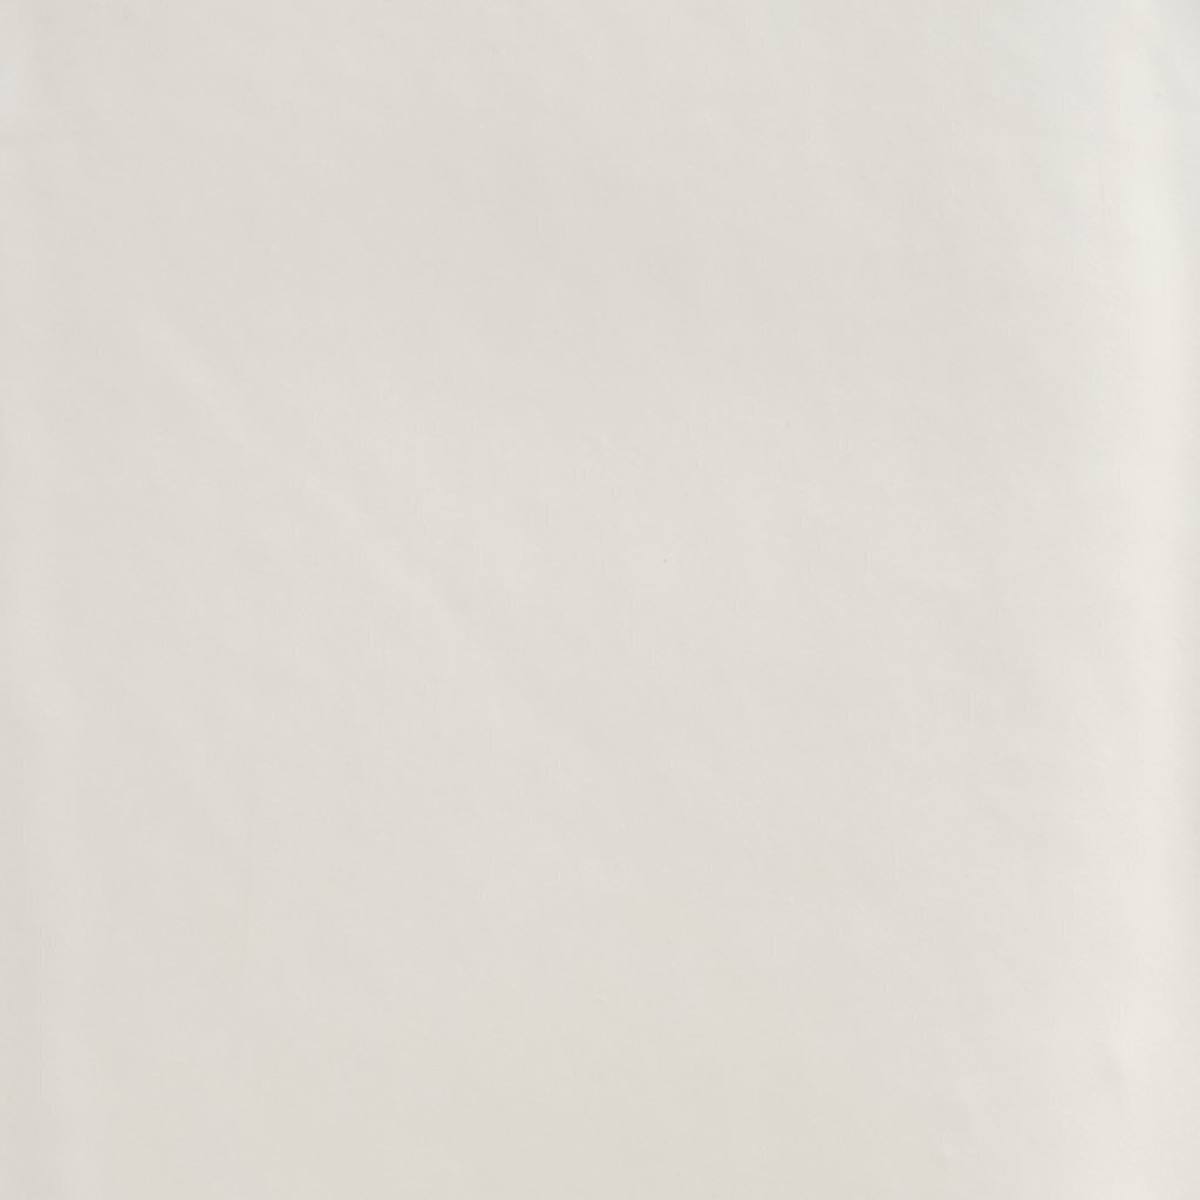 3M ruban adhésif PVC tout usage 764, blanc, 50 mm x 33 m, emballage individuel pratique